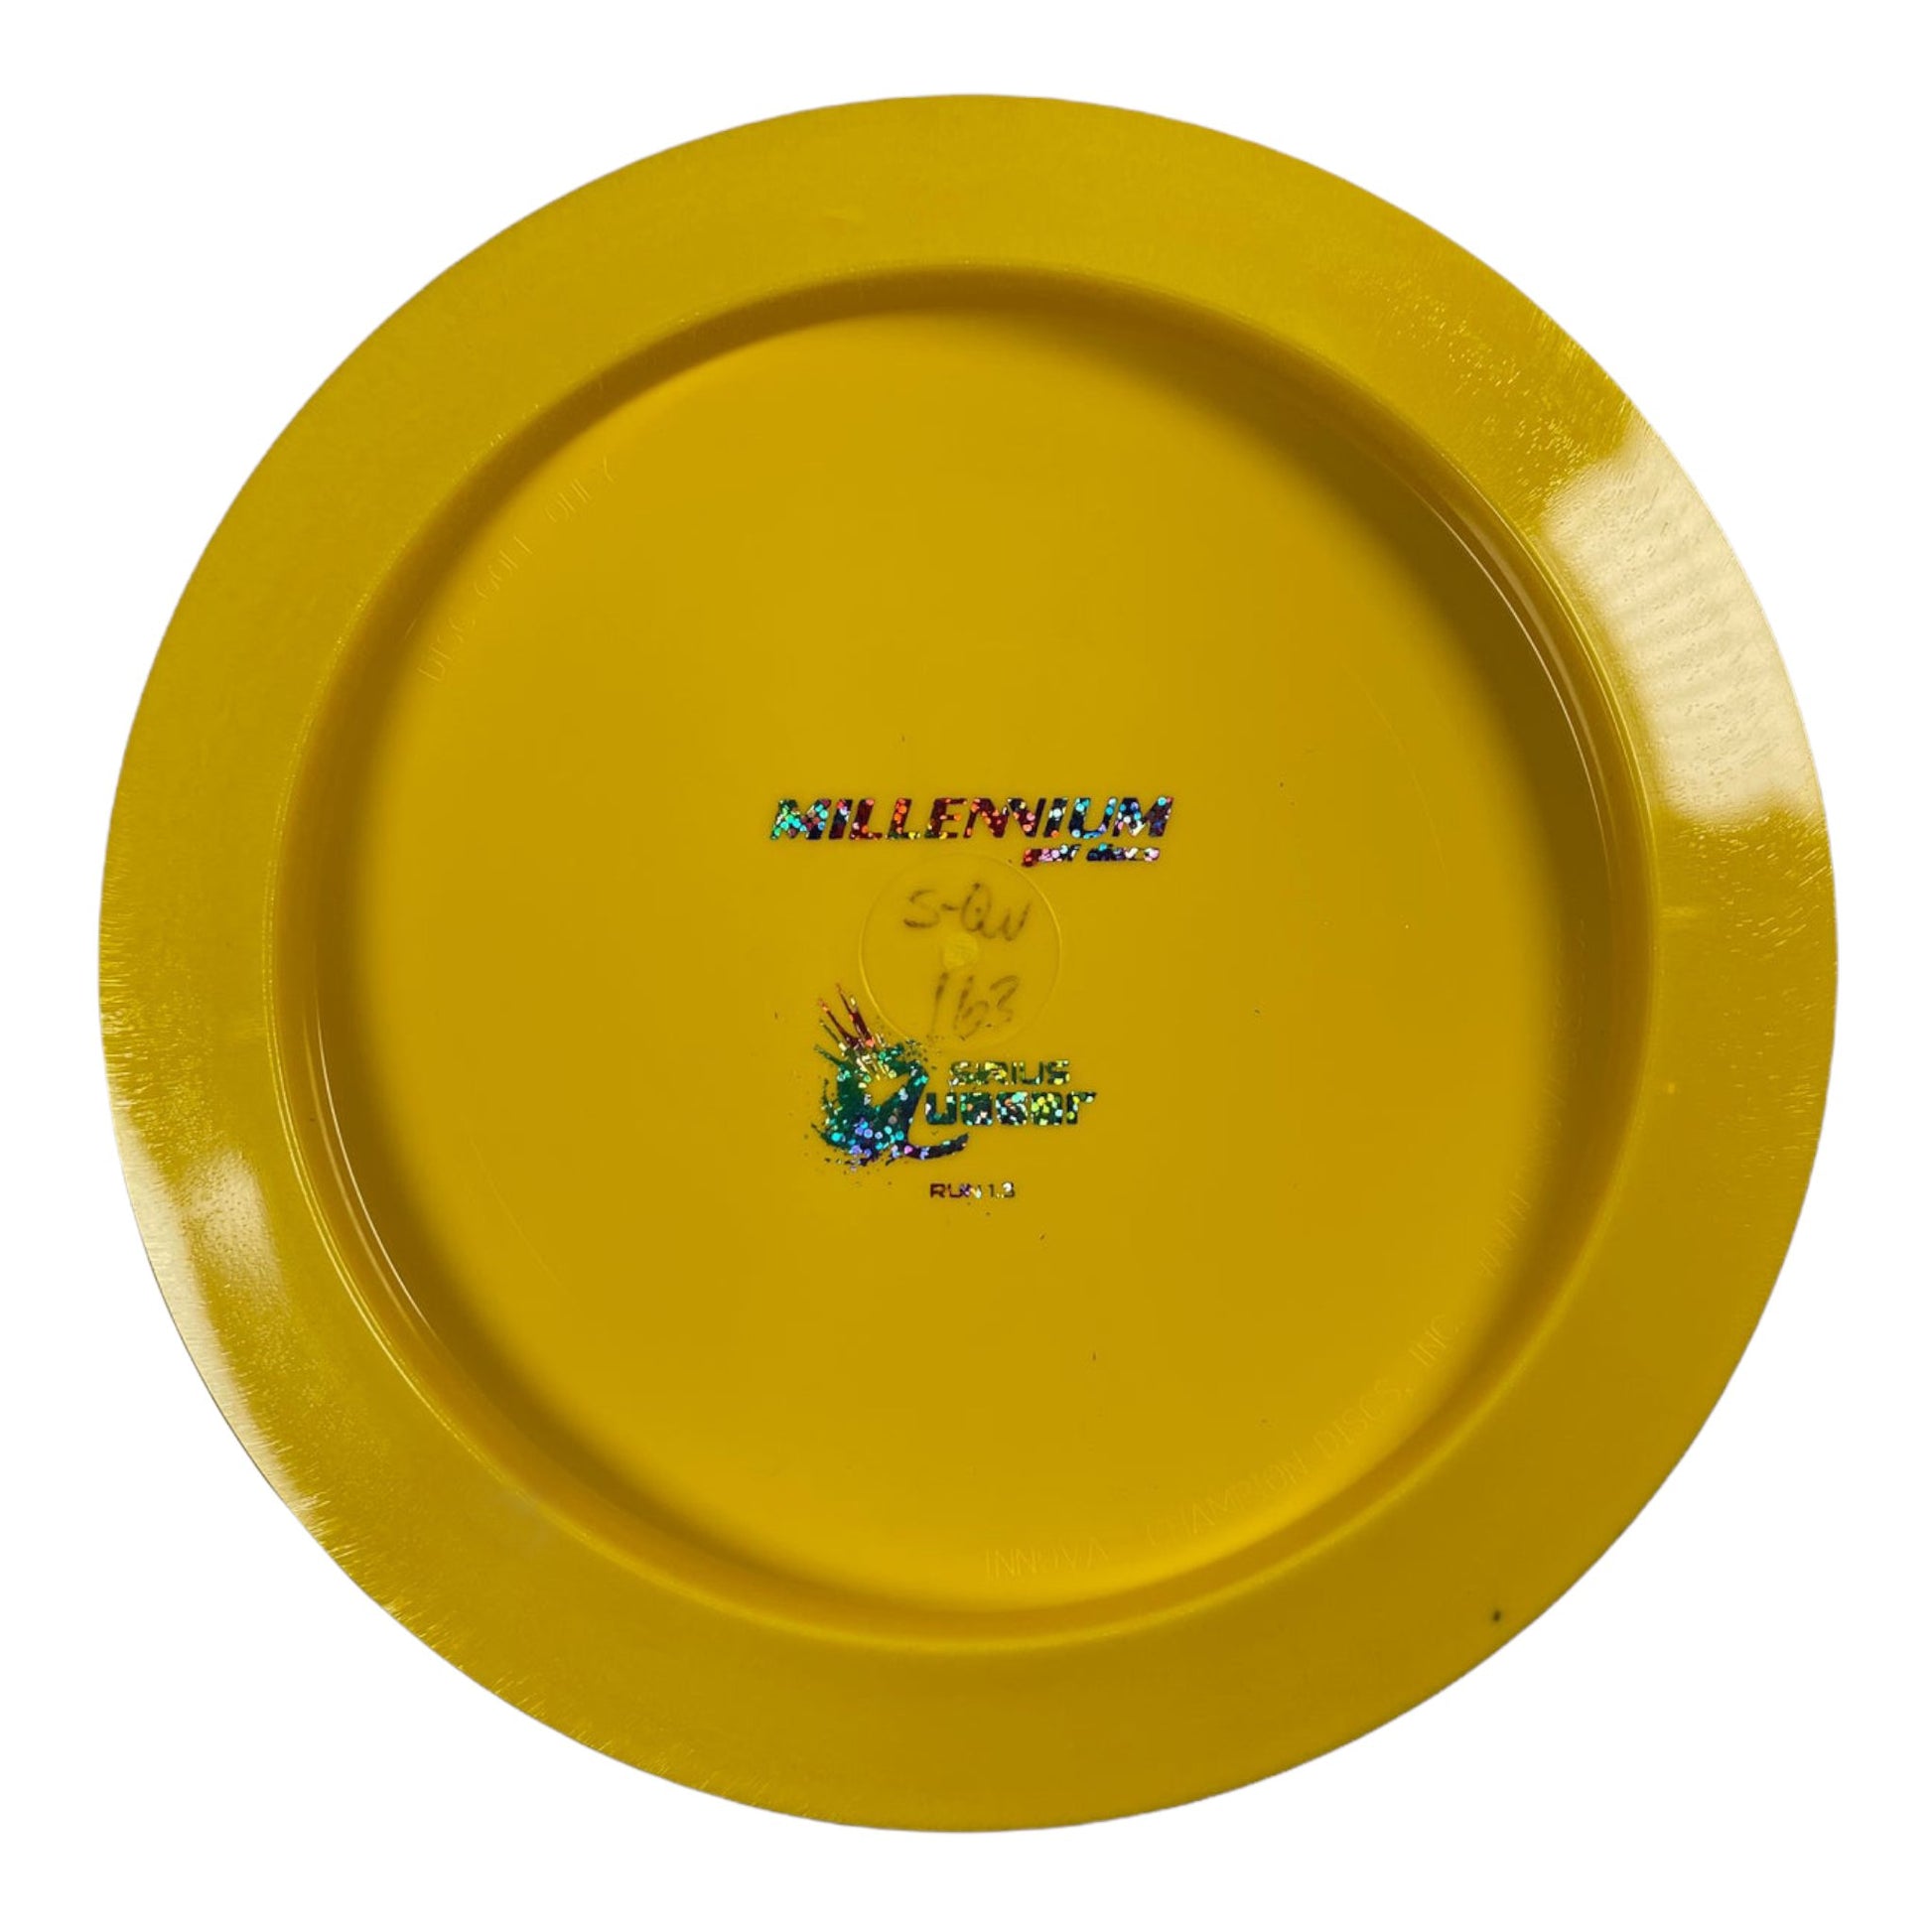 Millennium Golf Discs Quasar | Sirius | Yellow/Rainbow 163-175g